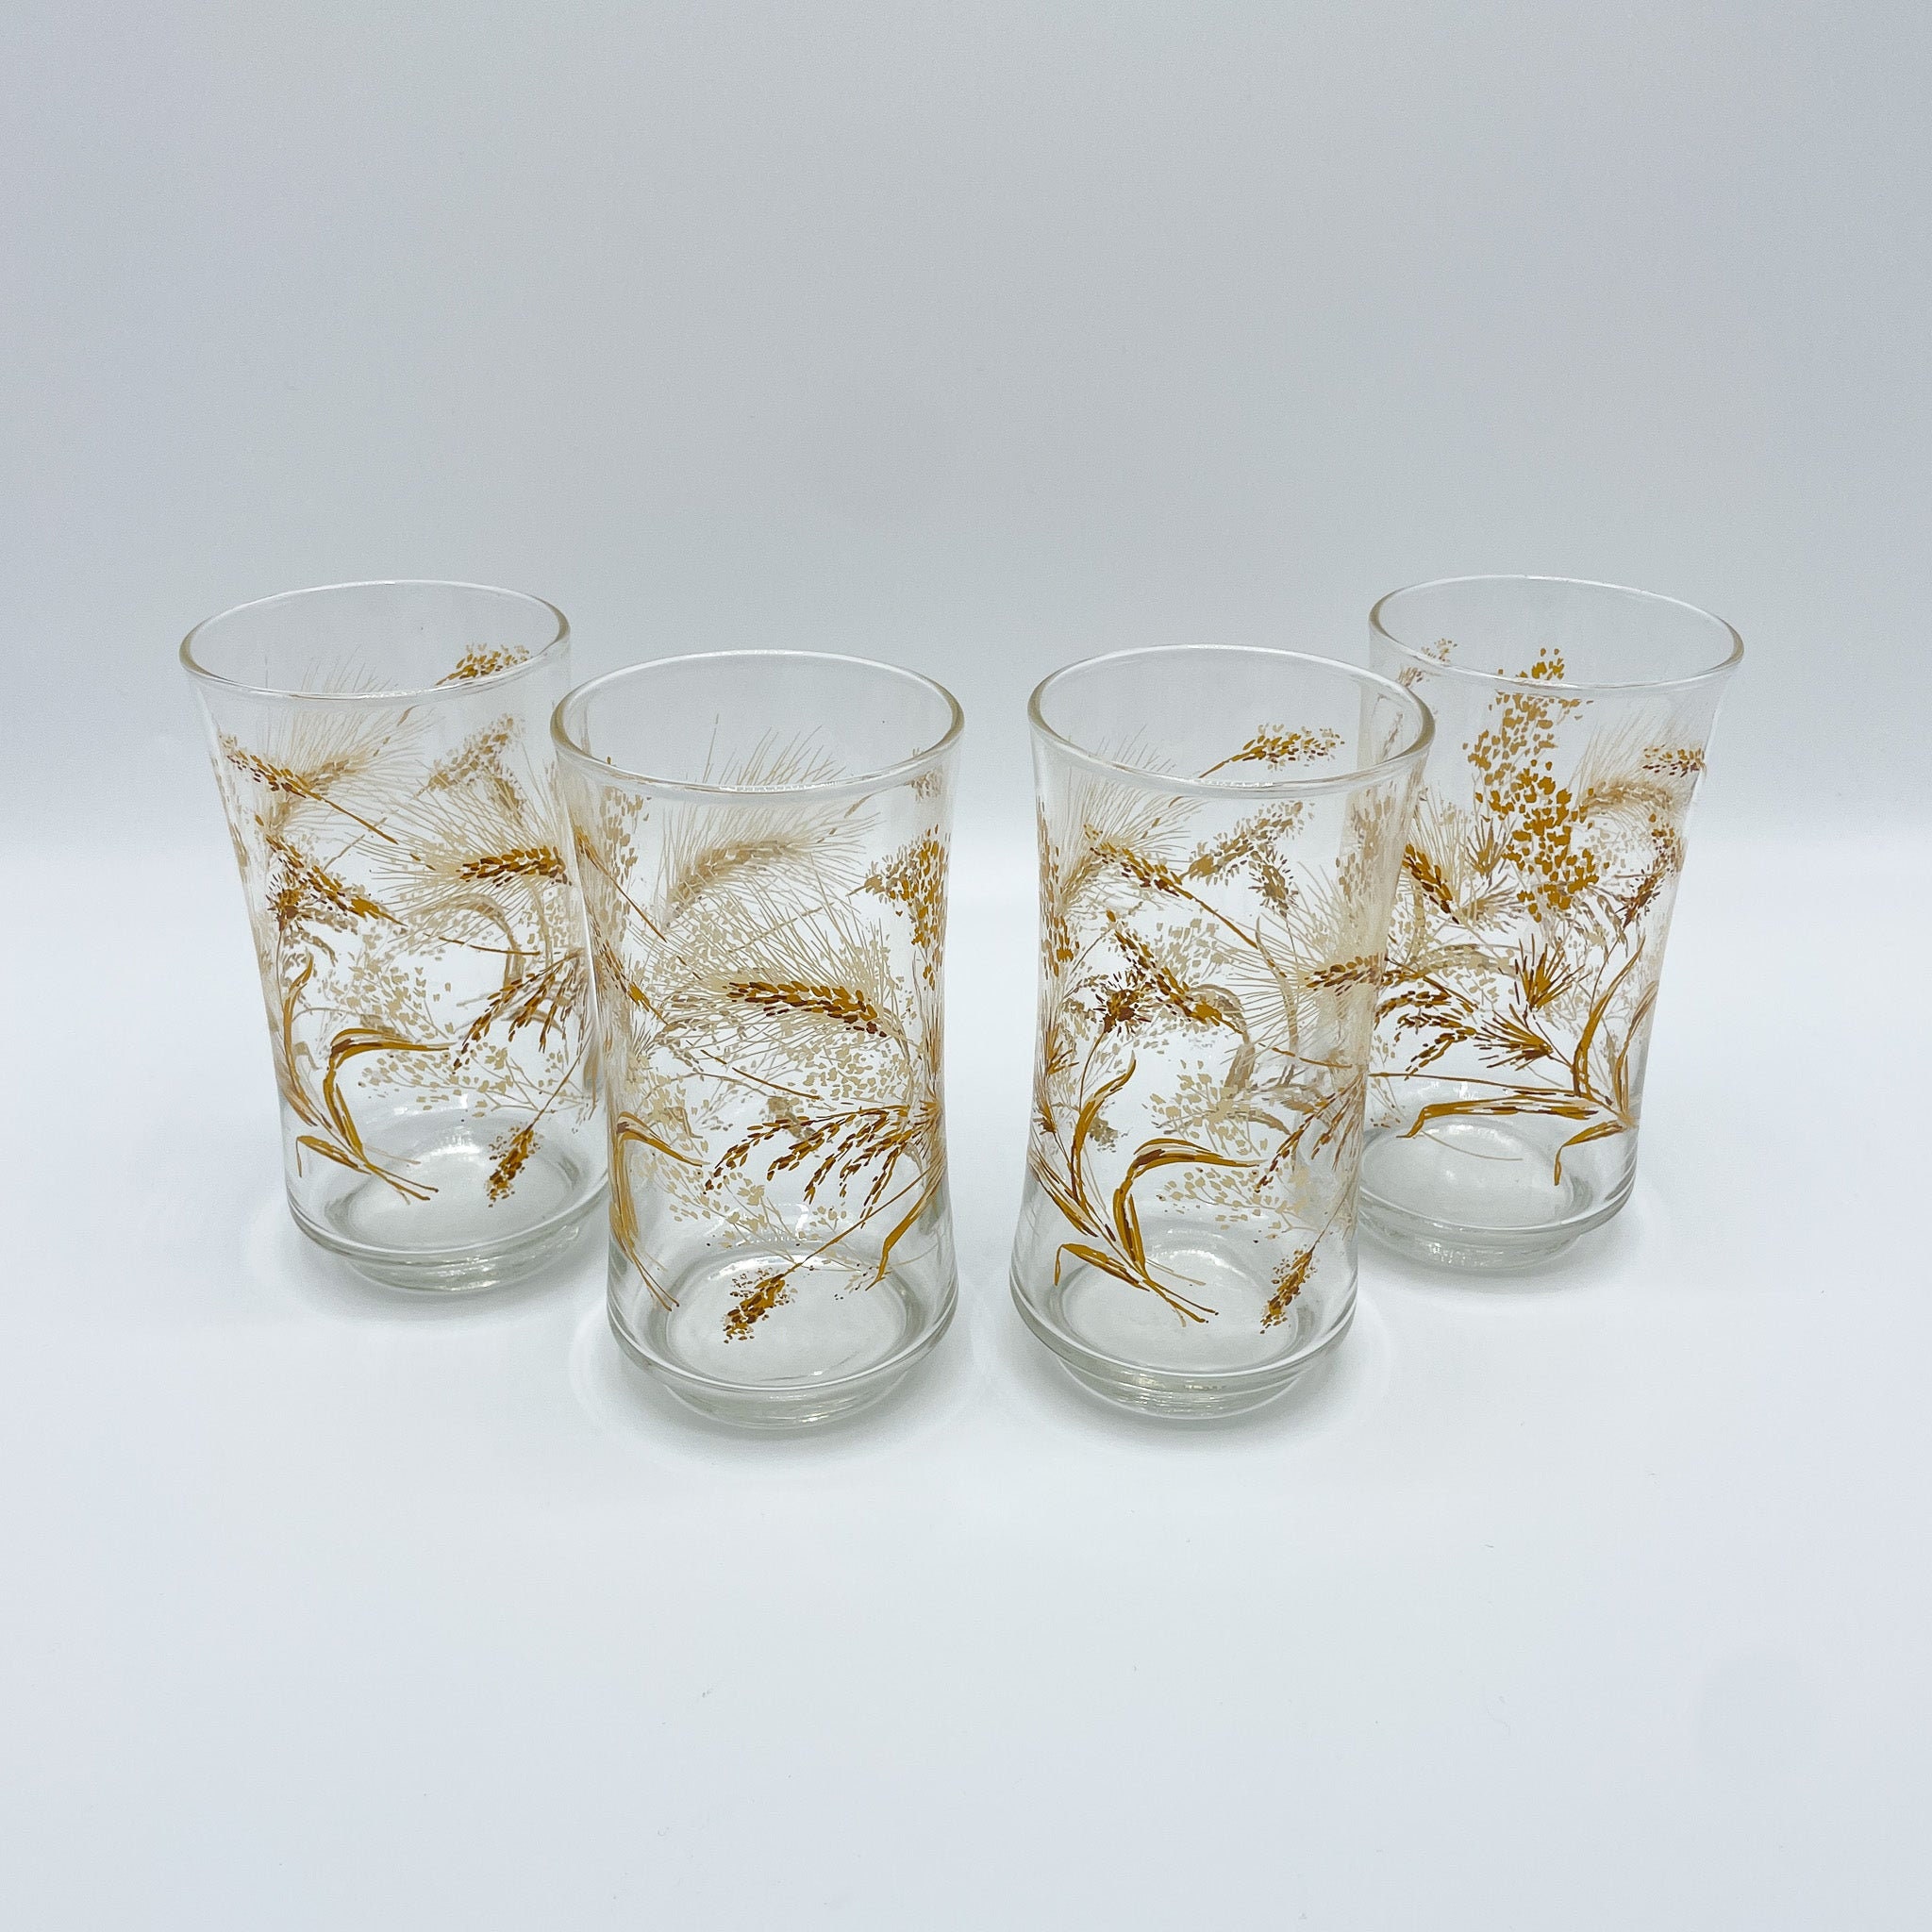 Vintage Set of 5 Tumblers Water Glasses 60s Mid Century Modern 70s Retro 